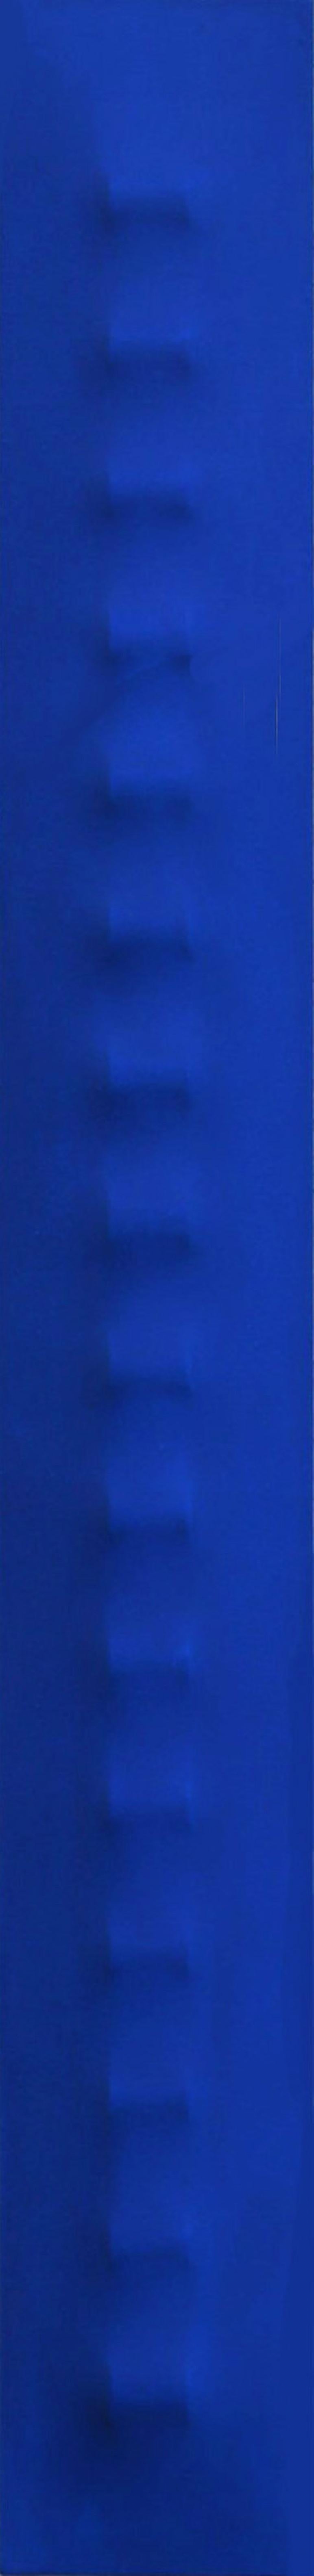 Len Klikunas Abstract Painting – Slims CNB – Dreidimensionales, minimalistisches, abstraktes Wandgemälde in Blau